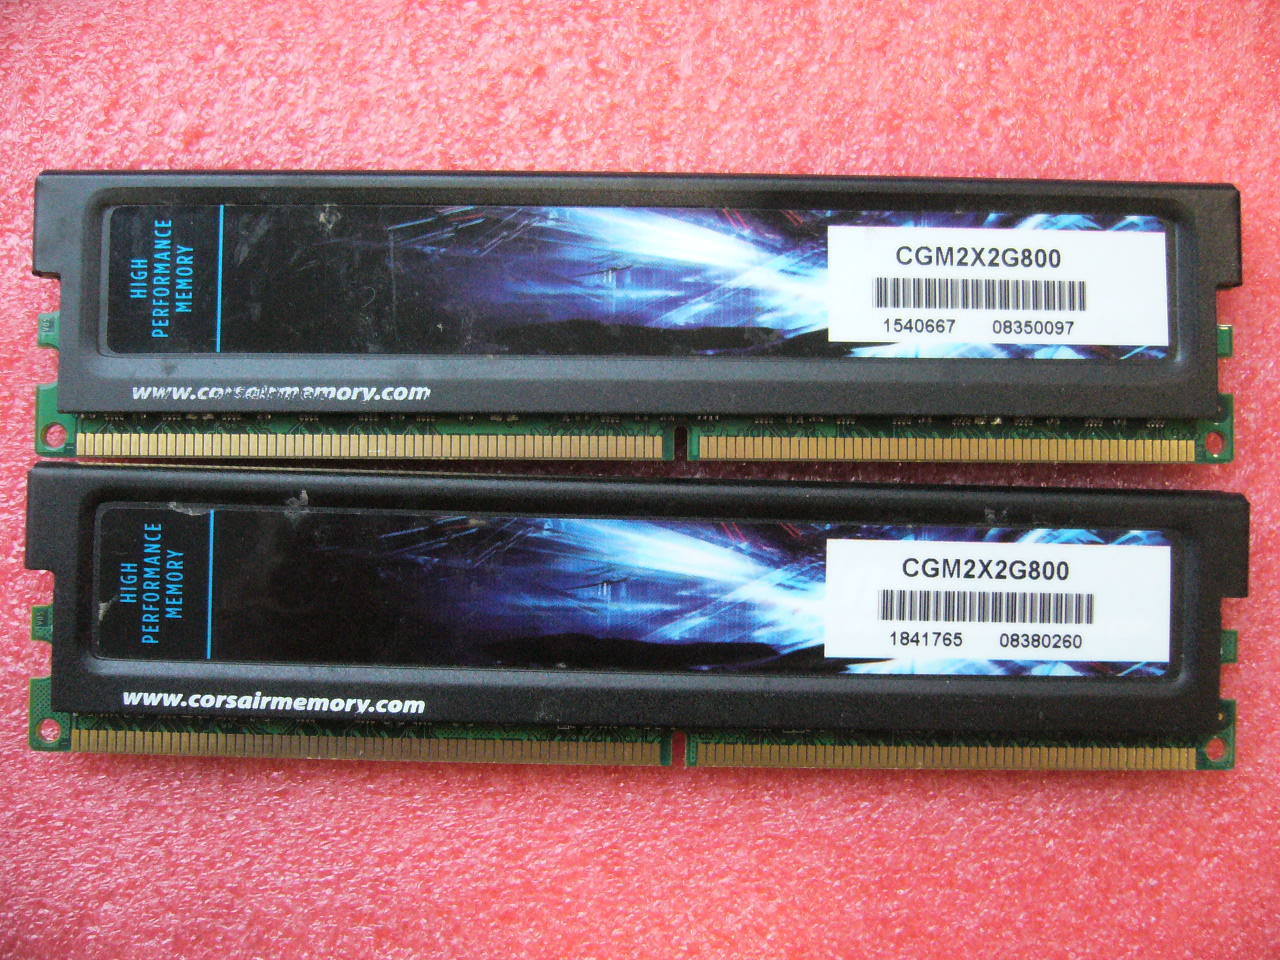 QTY 1x 2GB DDR2 800Mhz non-ECC desktop memory CORSAIR CGM2X2G800 - Click Image to Close